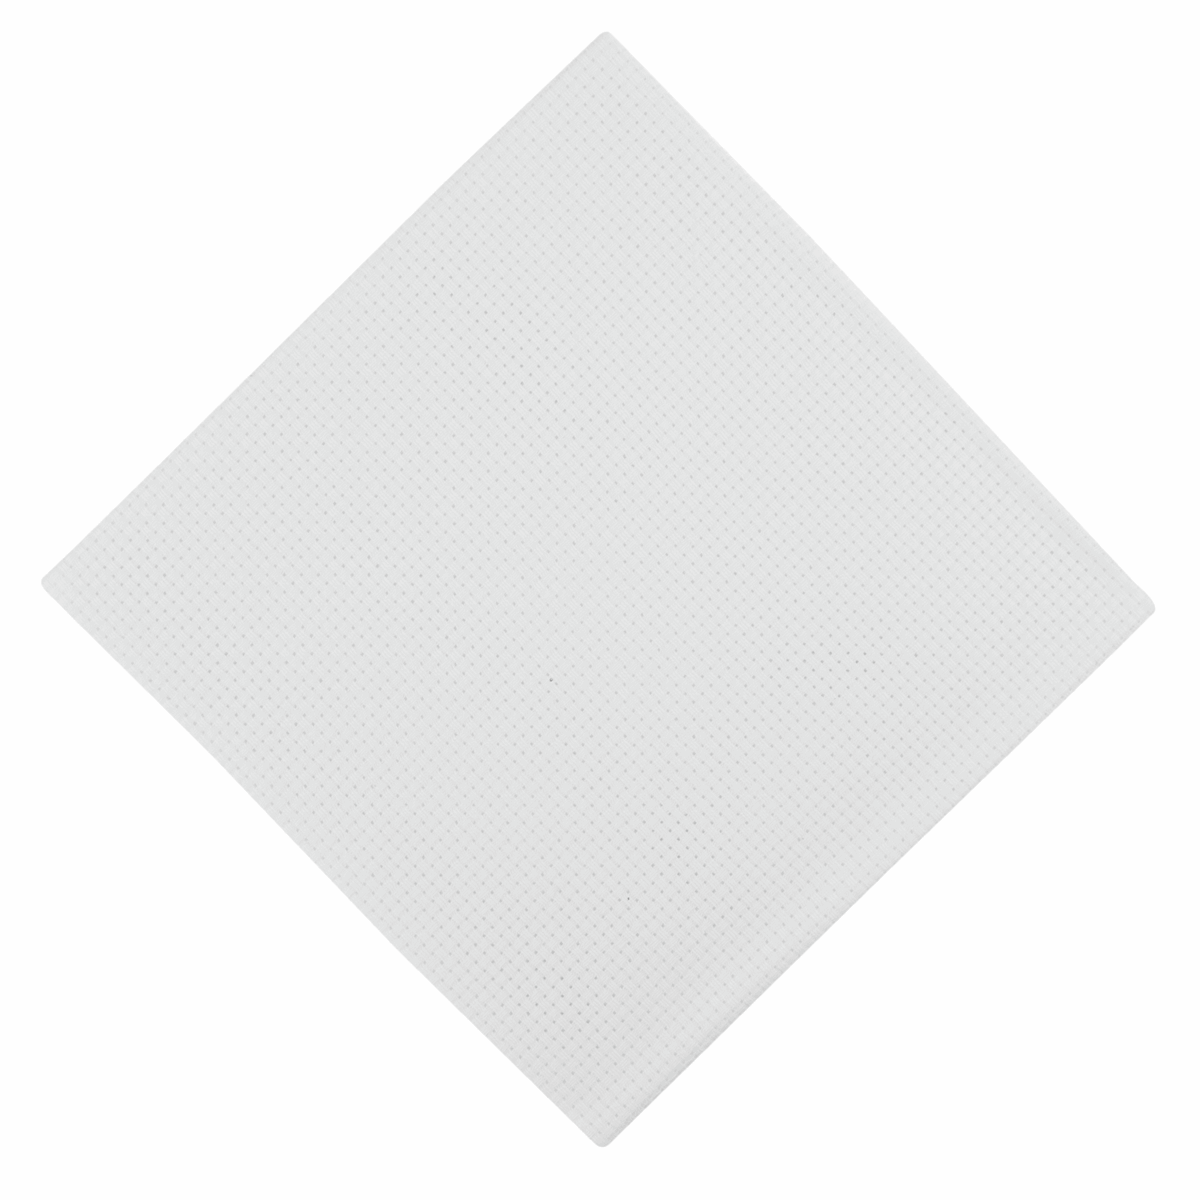 Aida Needlecraft Fabric 11 Count 30cm x 45cm White